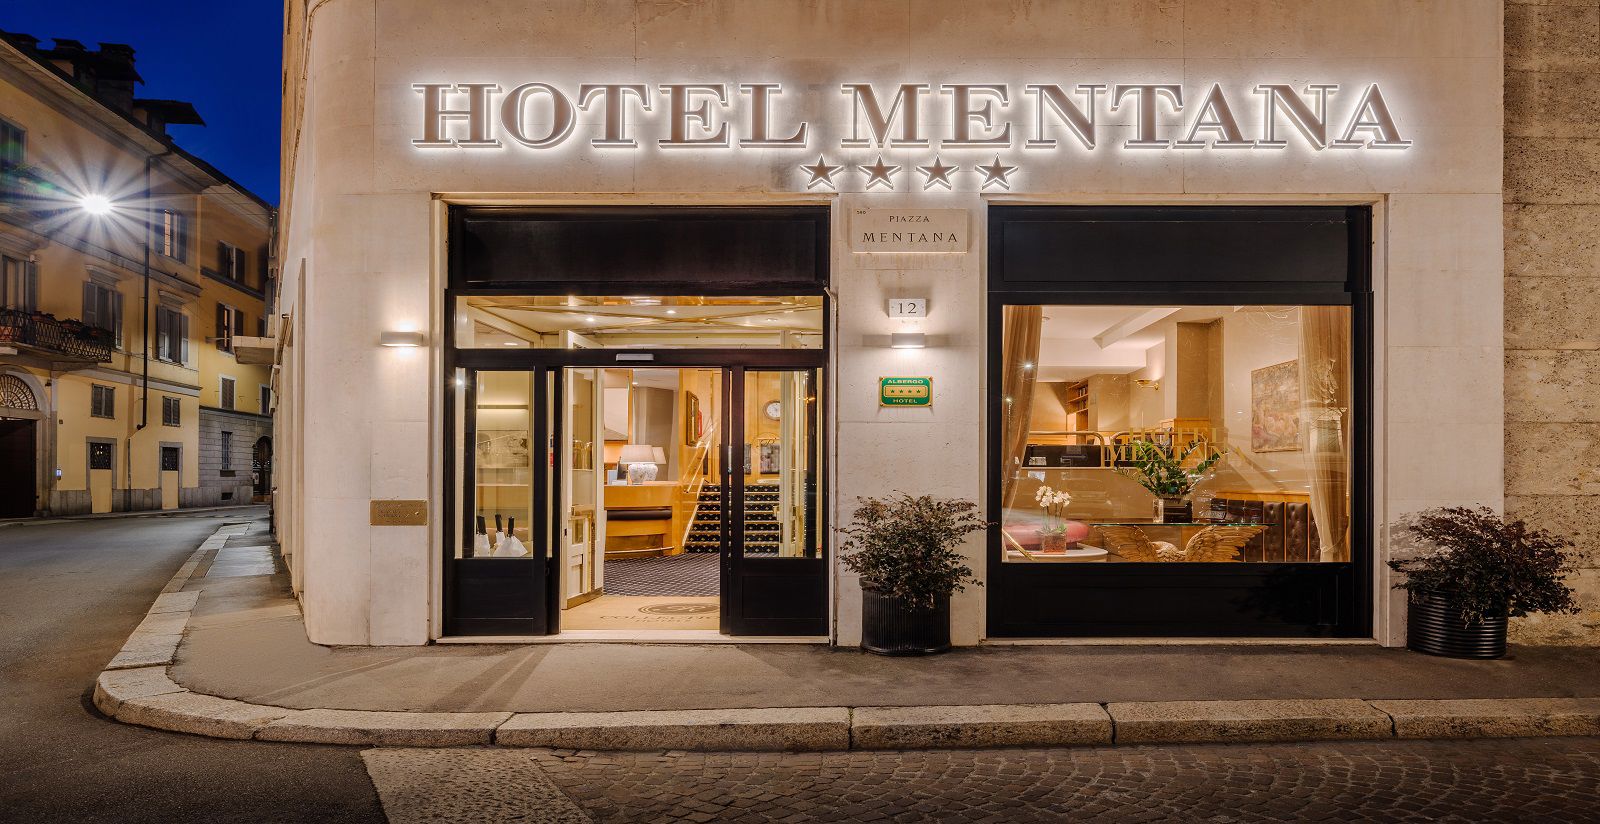 Hotel Mentana - Where we are 2